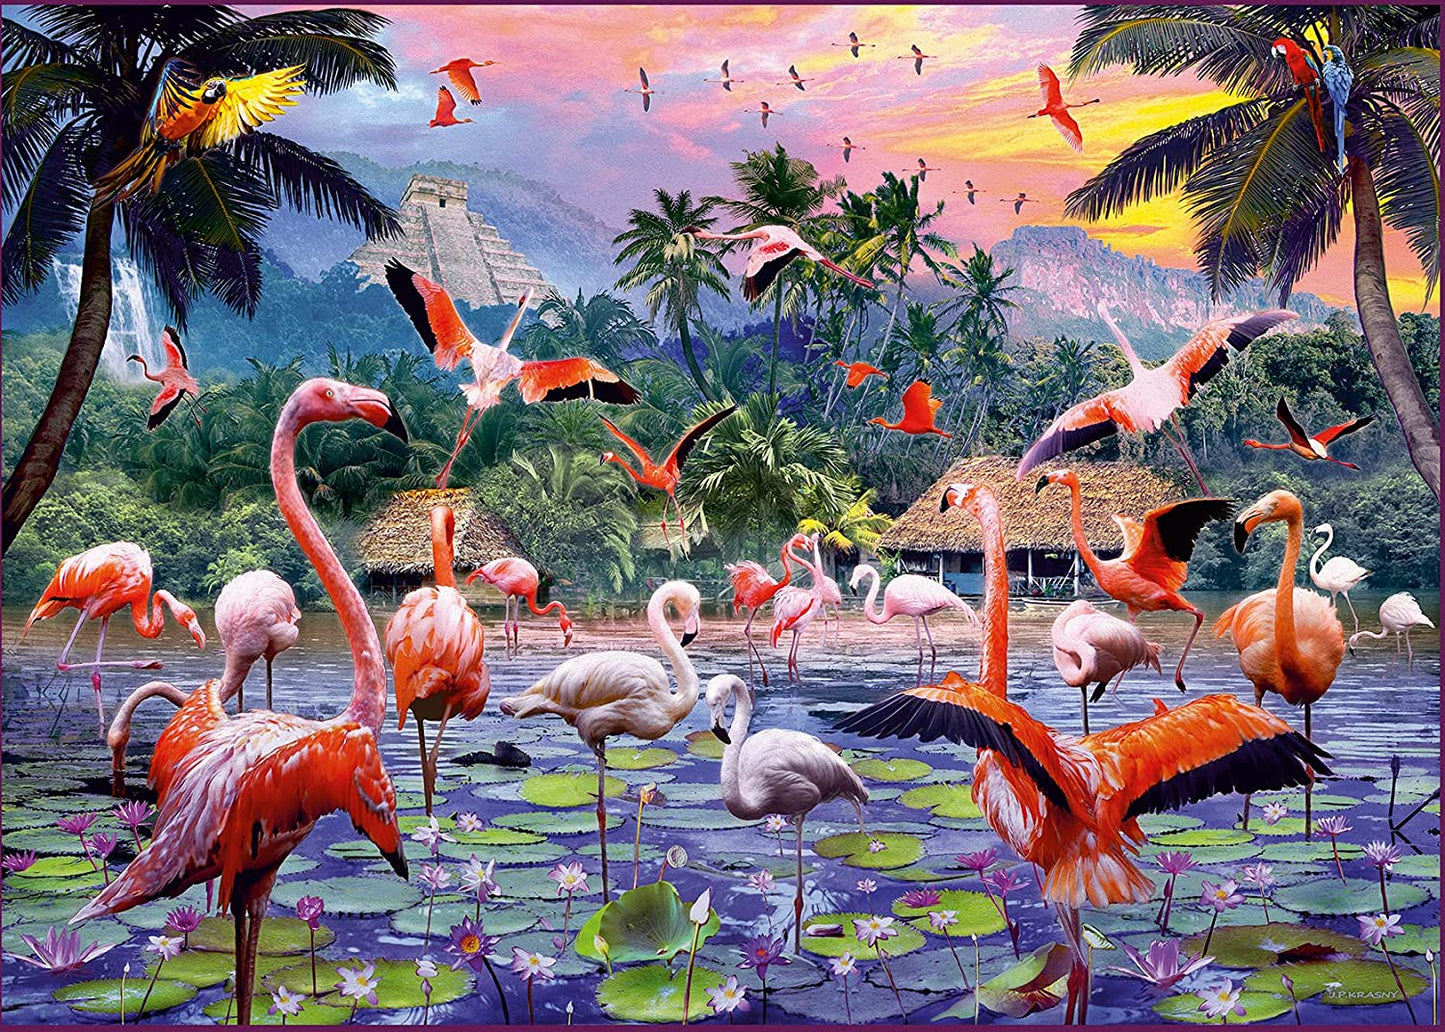 Ravensburger - Pink Flamingoes - 1000 Piece Jigsaw Puzzle